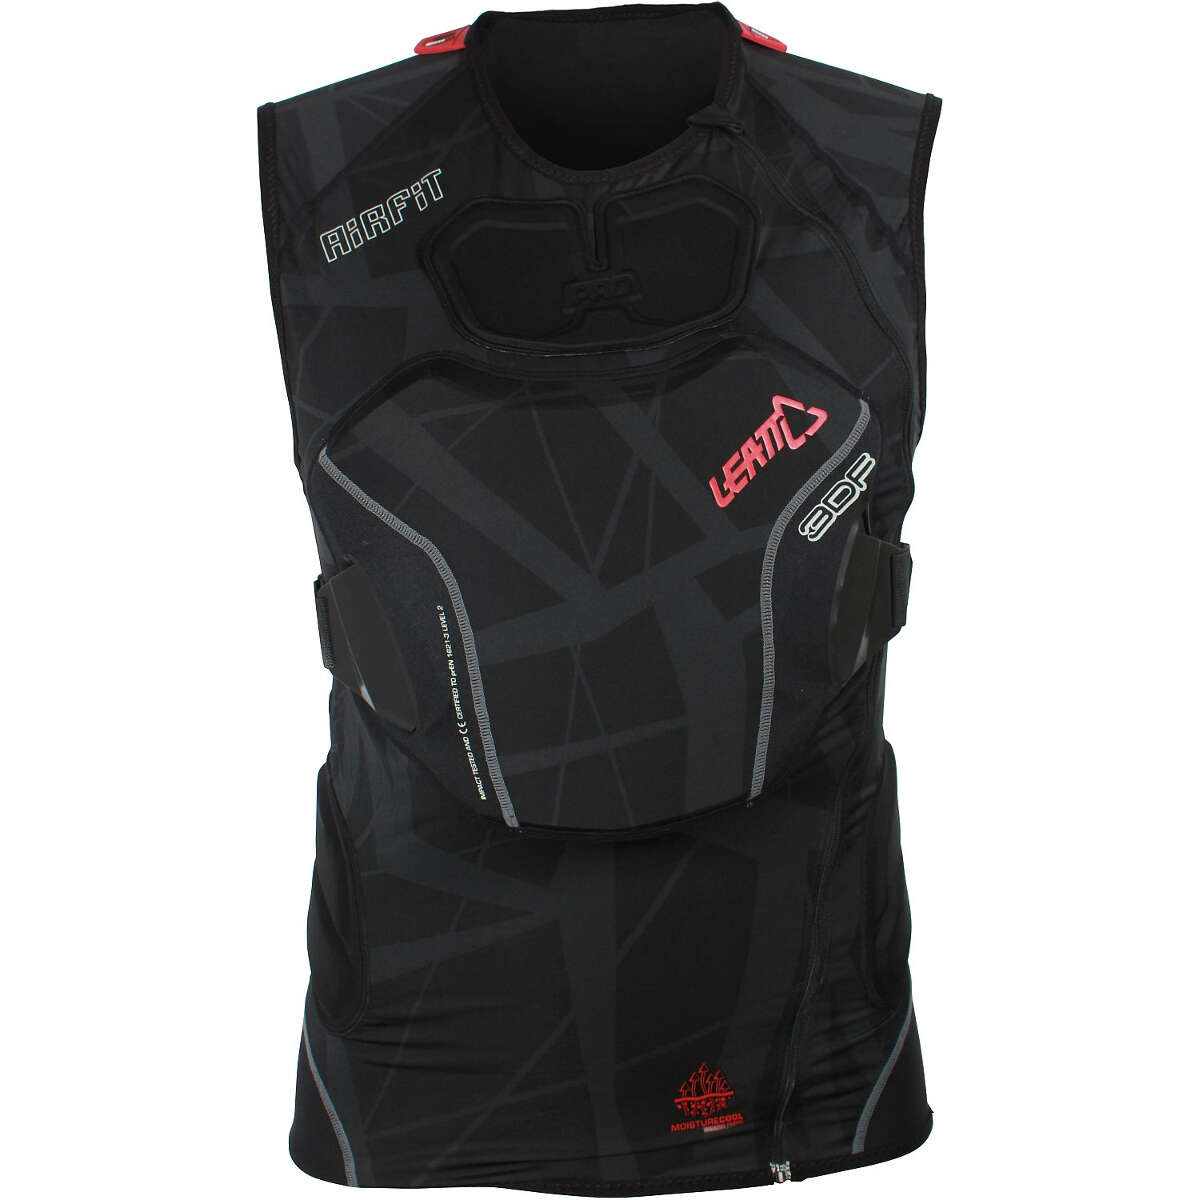 Leatt Sleeveless Protector Shirt Body Vest 3DF AirFit Black